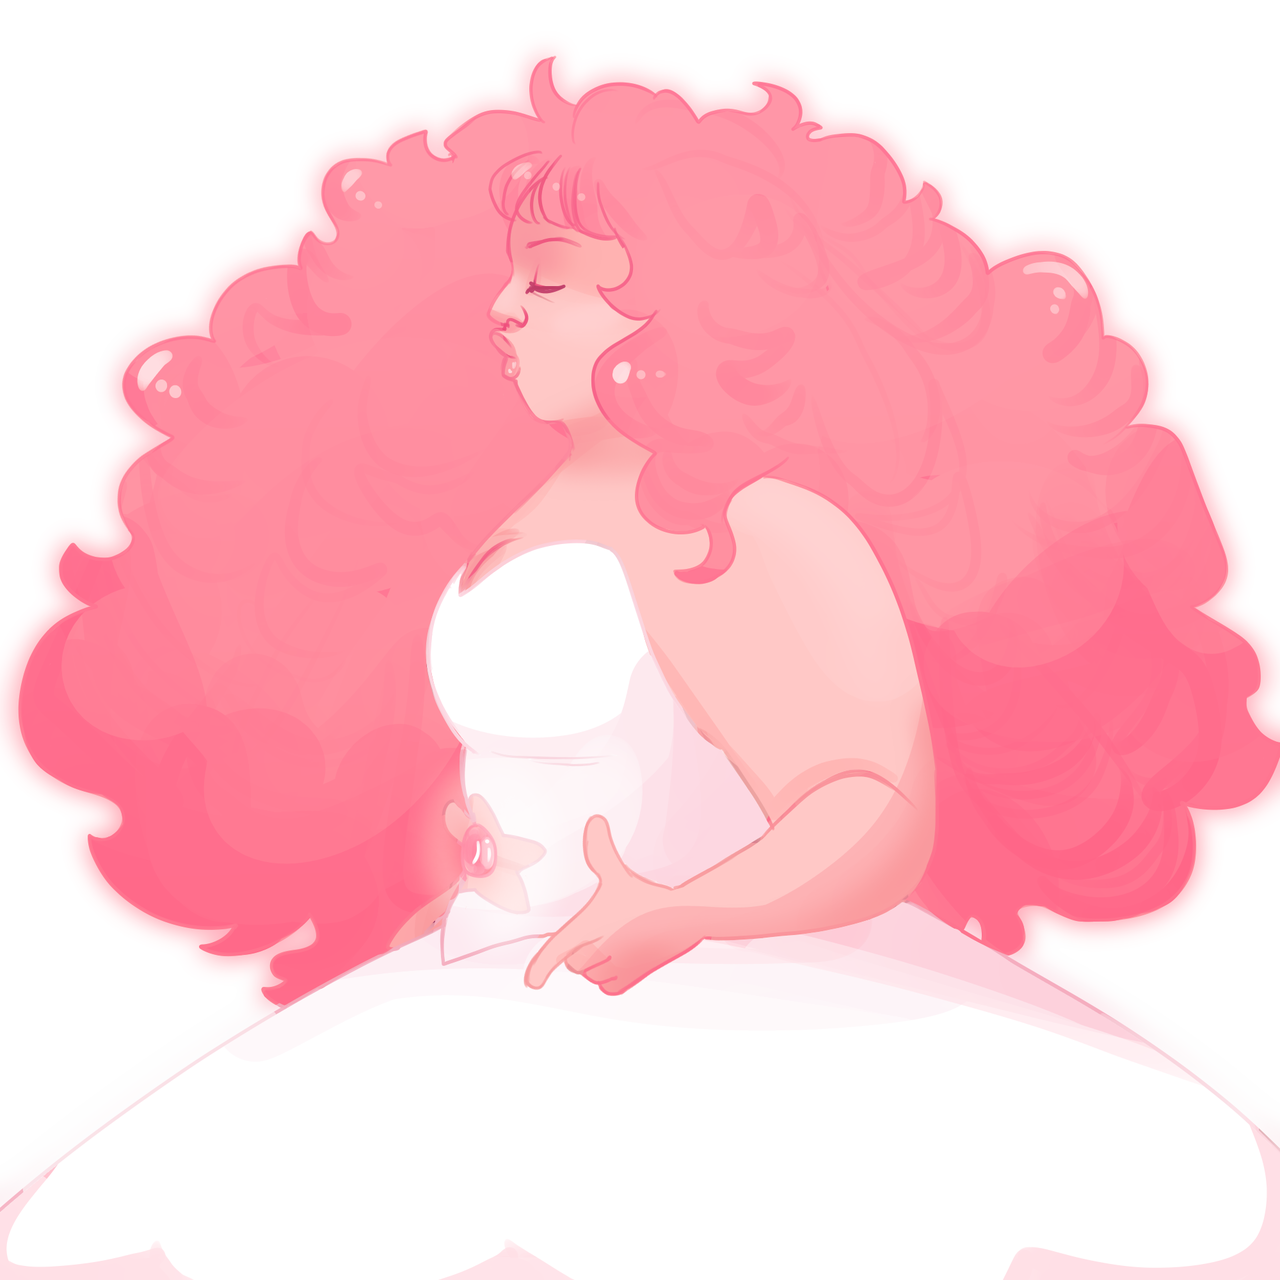 pink lady….. yeehaw 💞💖💕💓💖💕💞💝💞💕💗